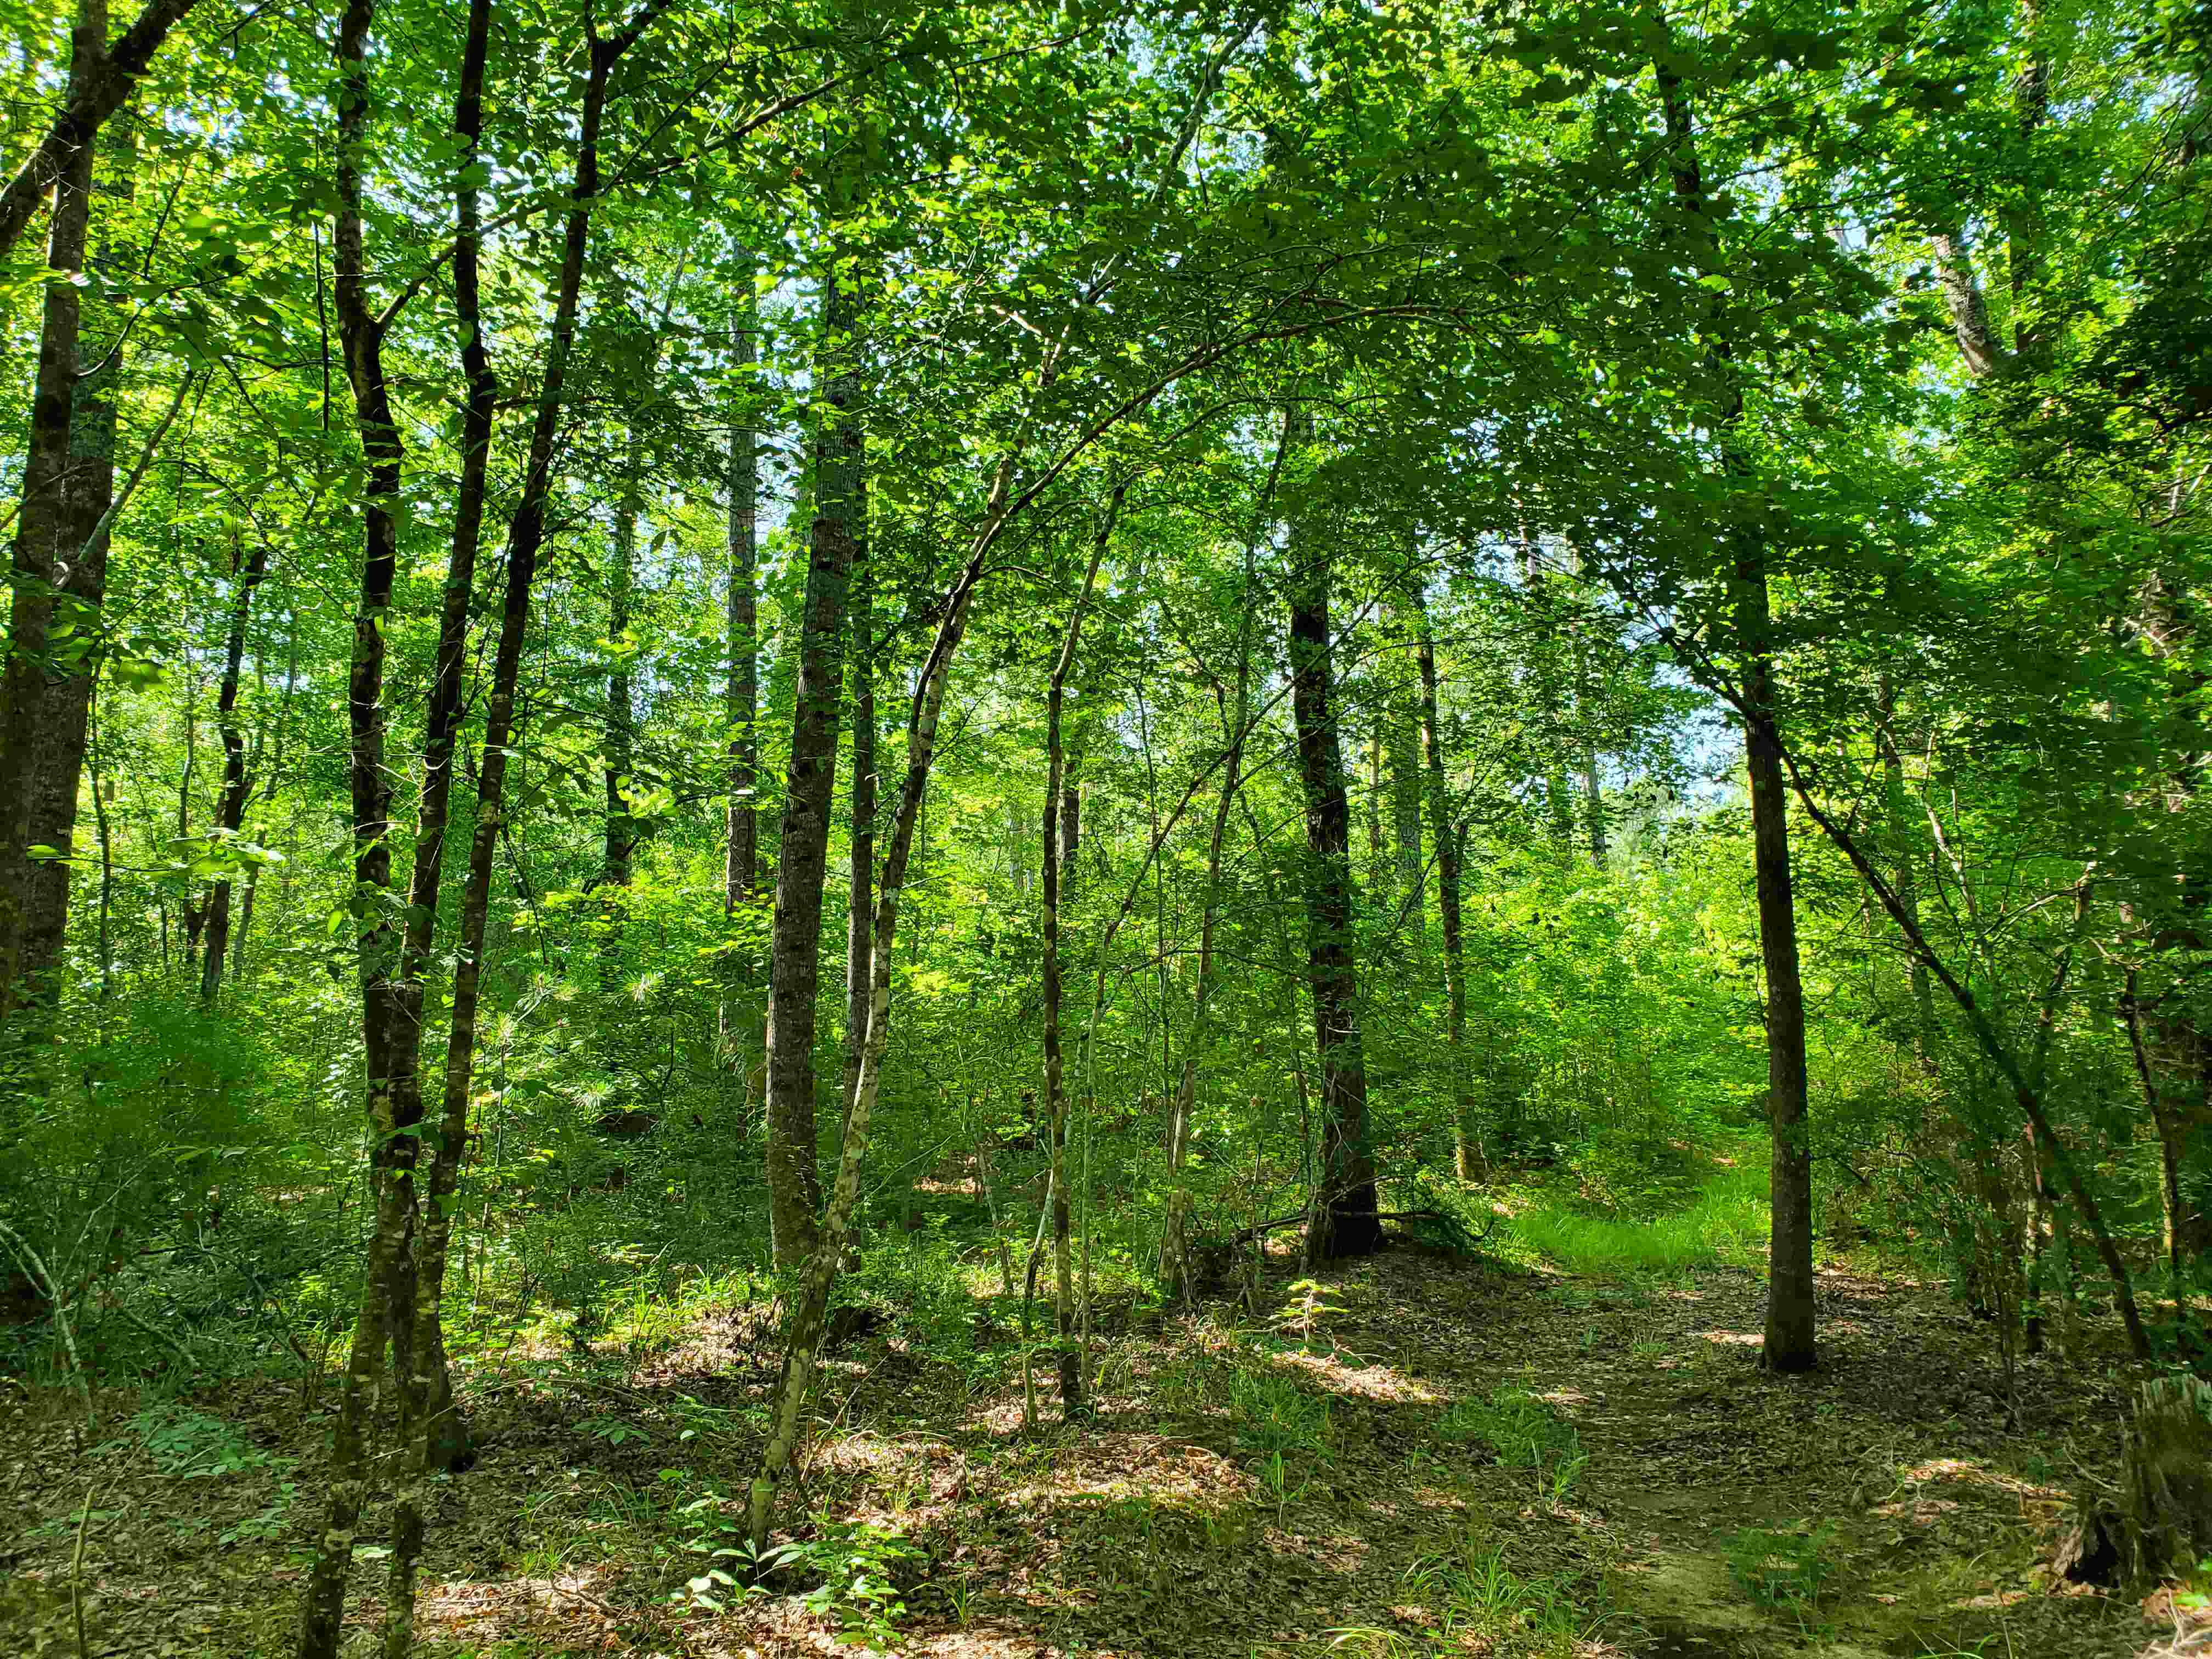 Hardwood trees along the boundary line trail